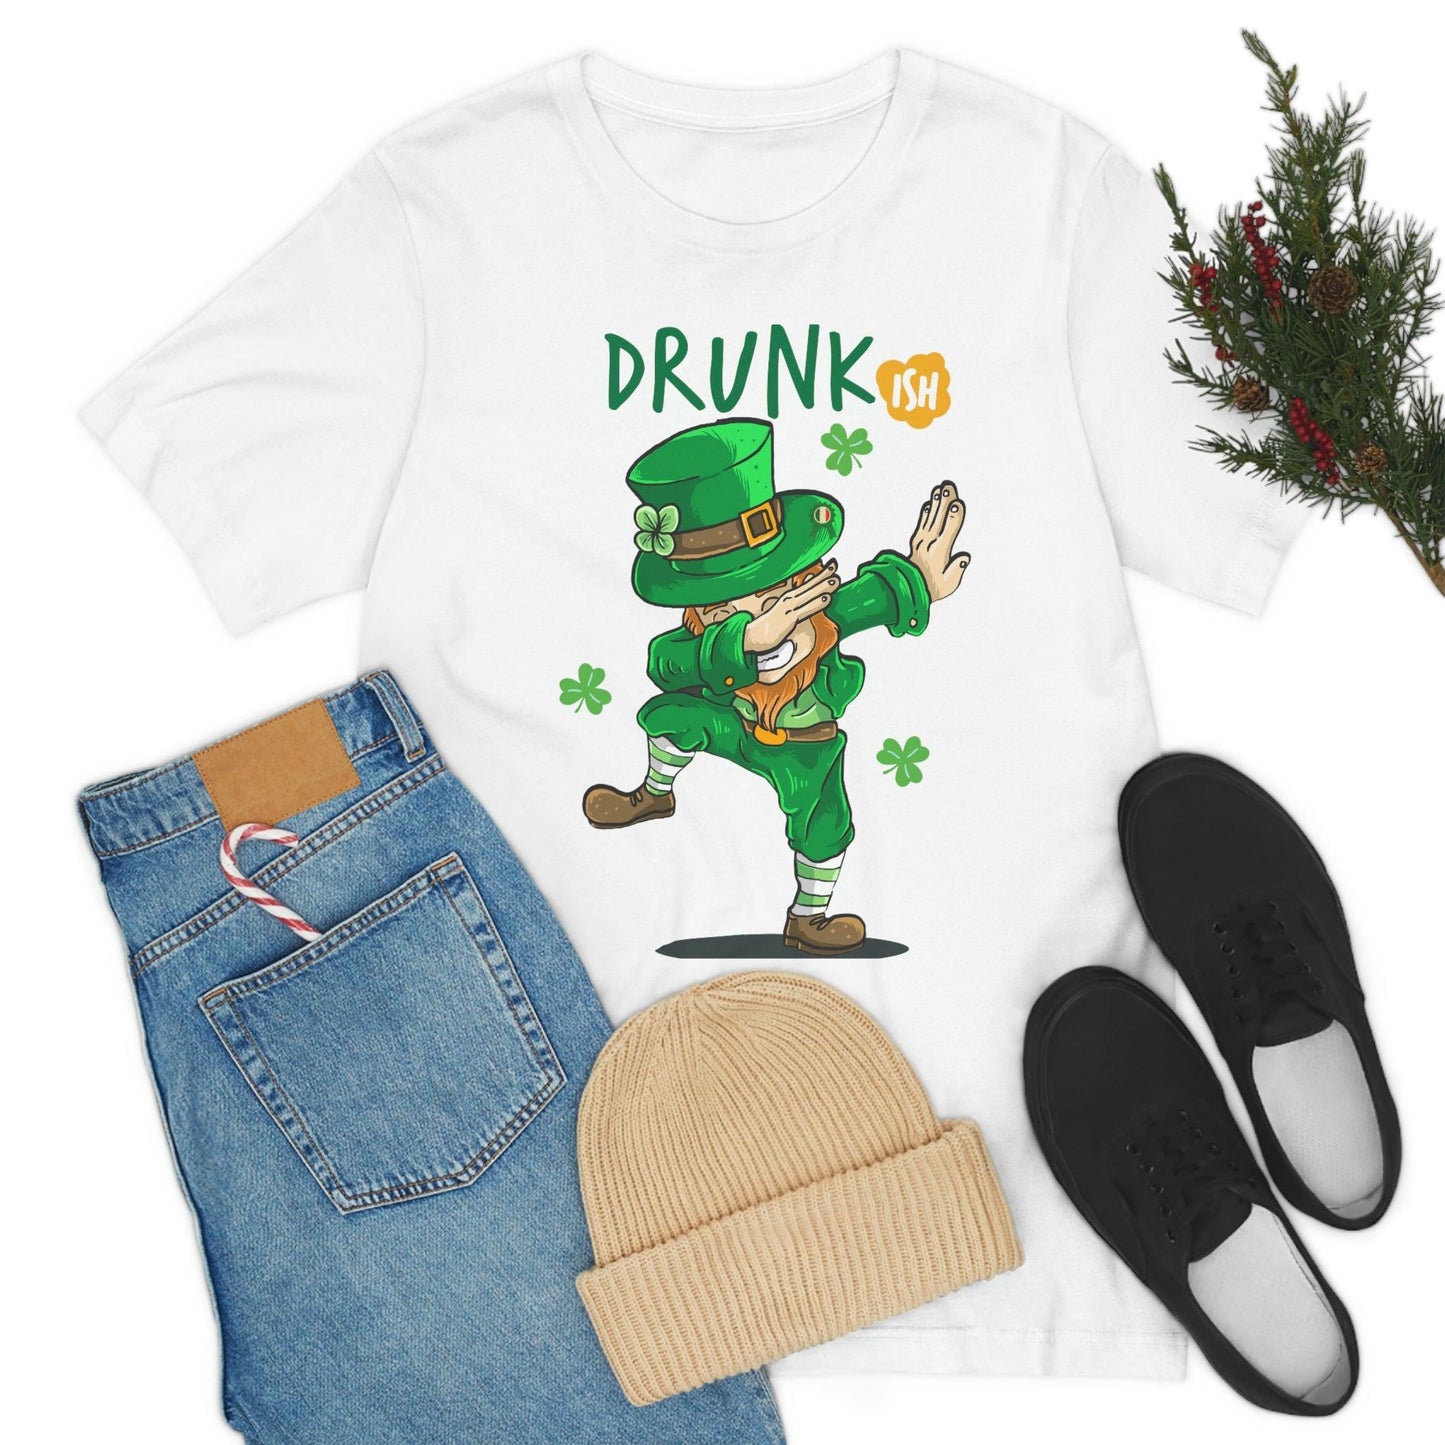 Funny St Patrick's Day shirt Lucky Shamrock shirt shenanigans shirt St Paddys day shirt - Day drinking shirt Drunk ish shirt